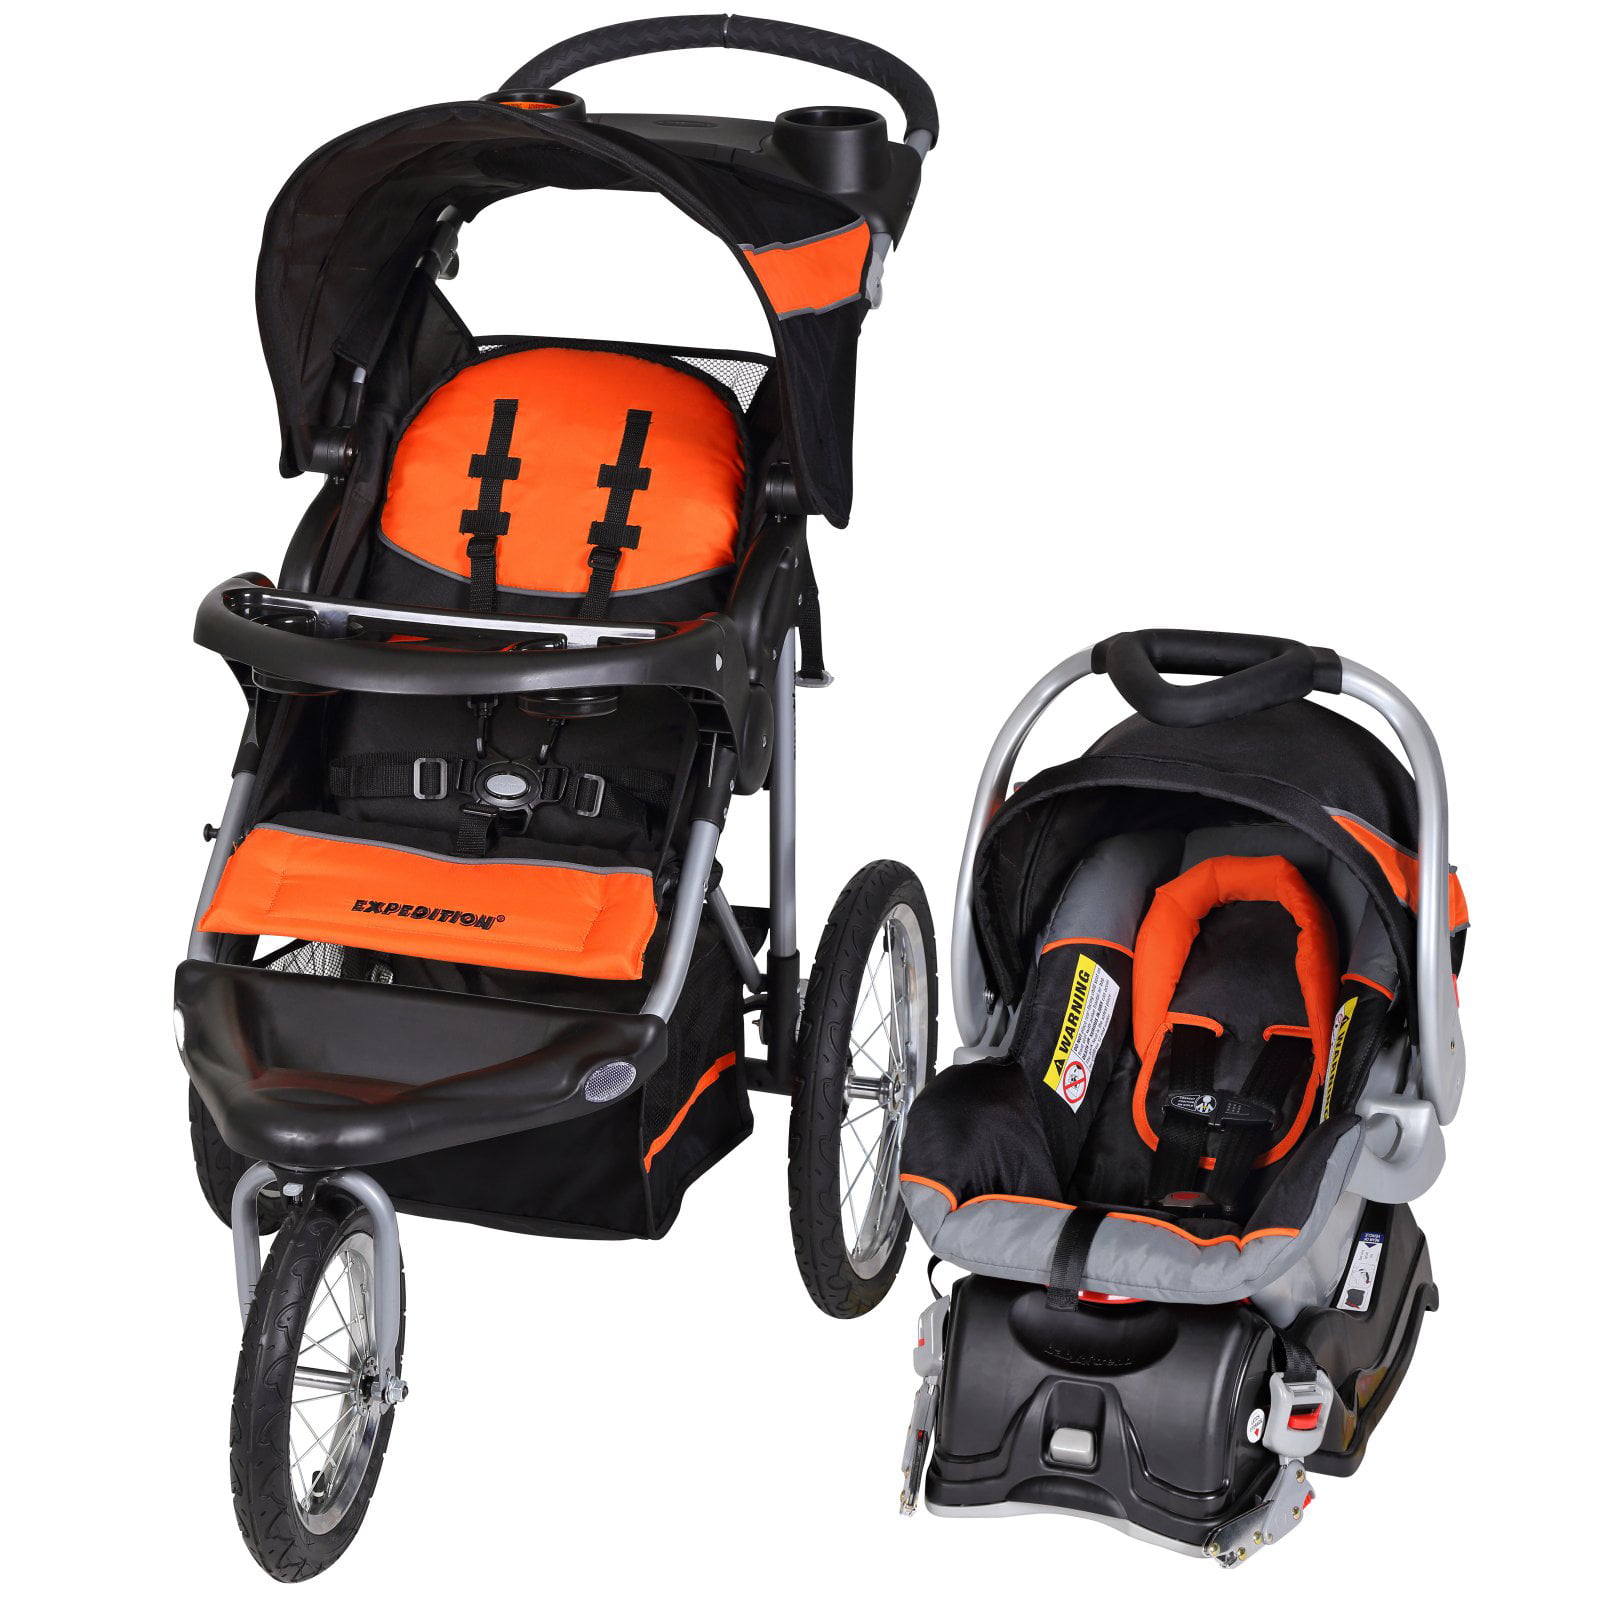 orange baby stroller